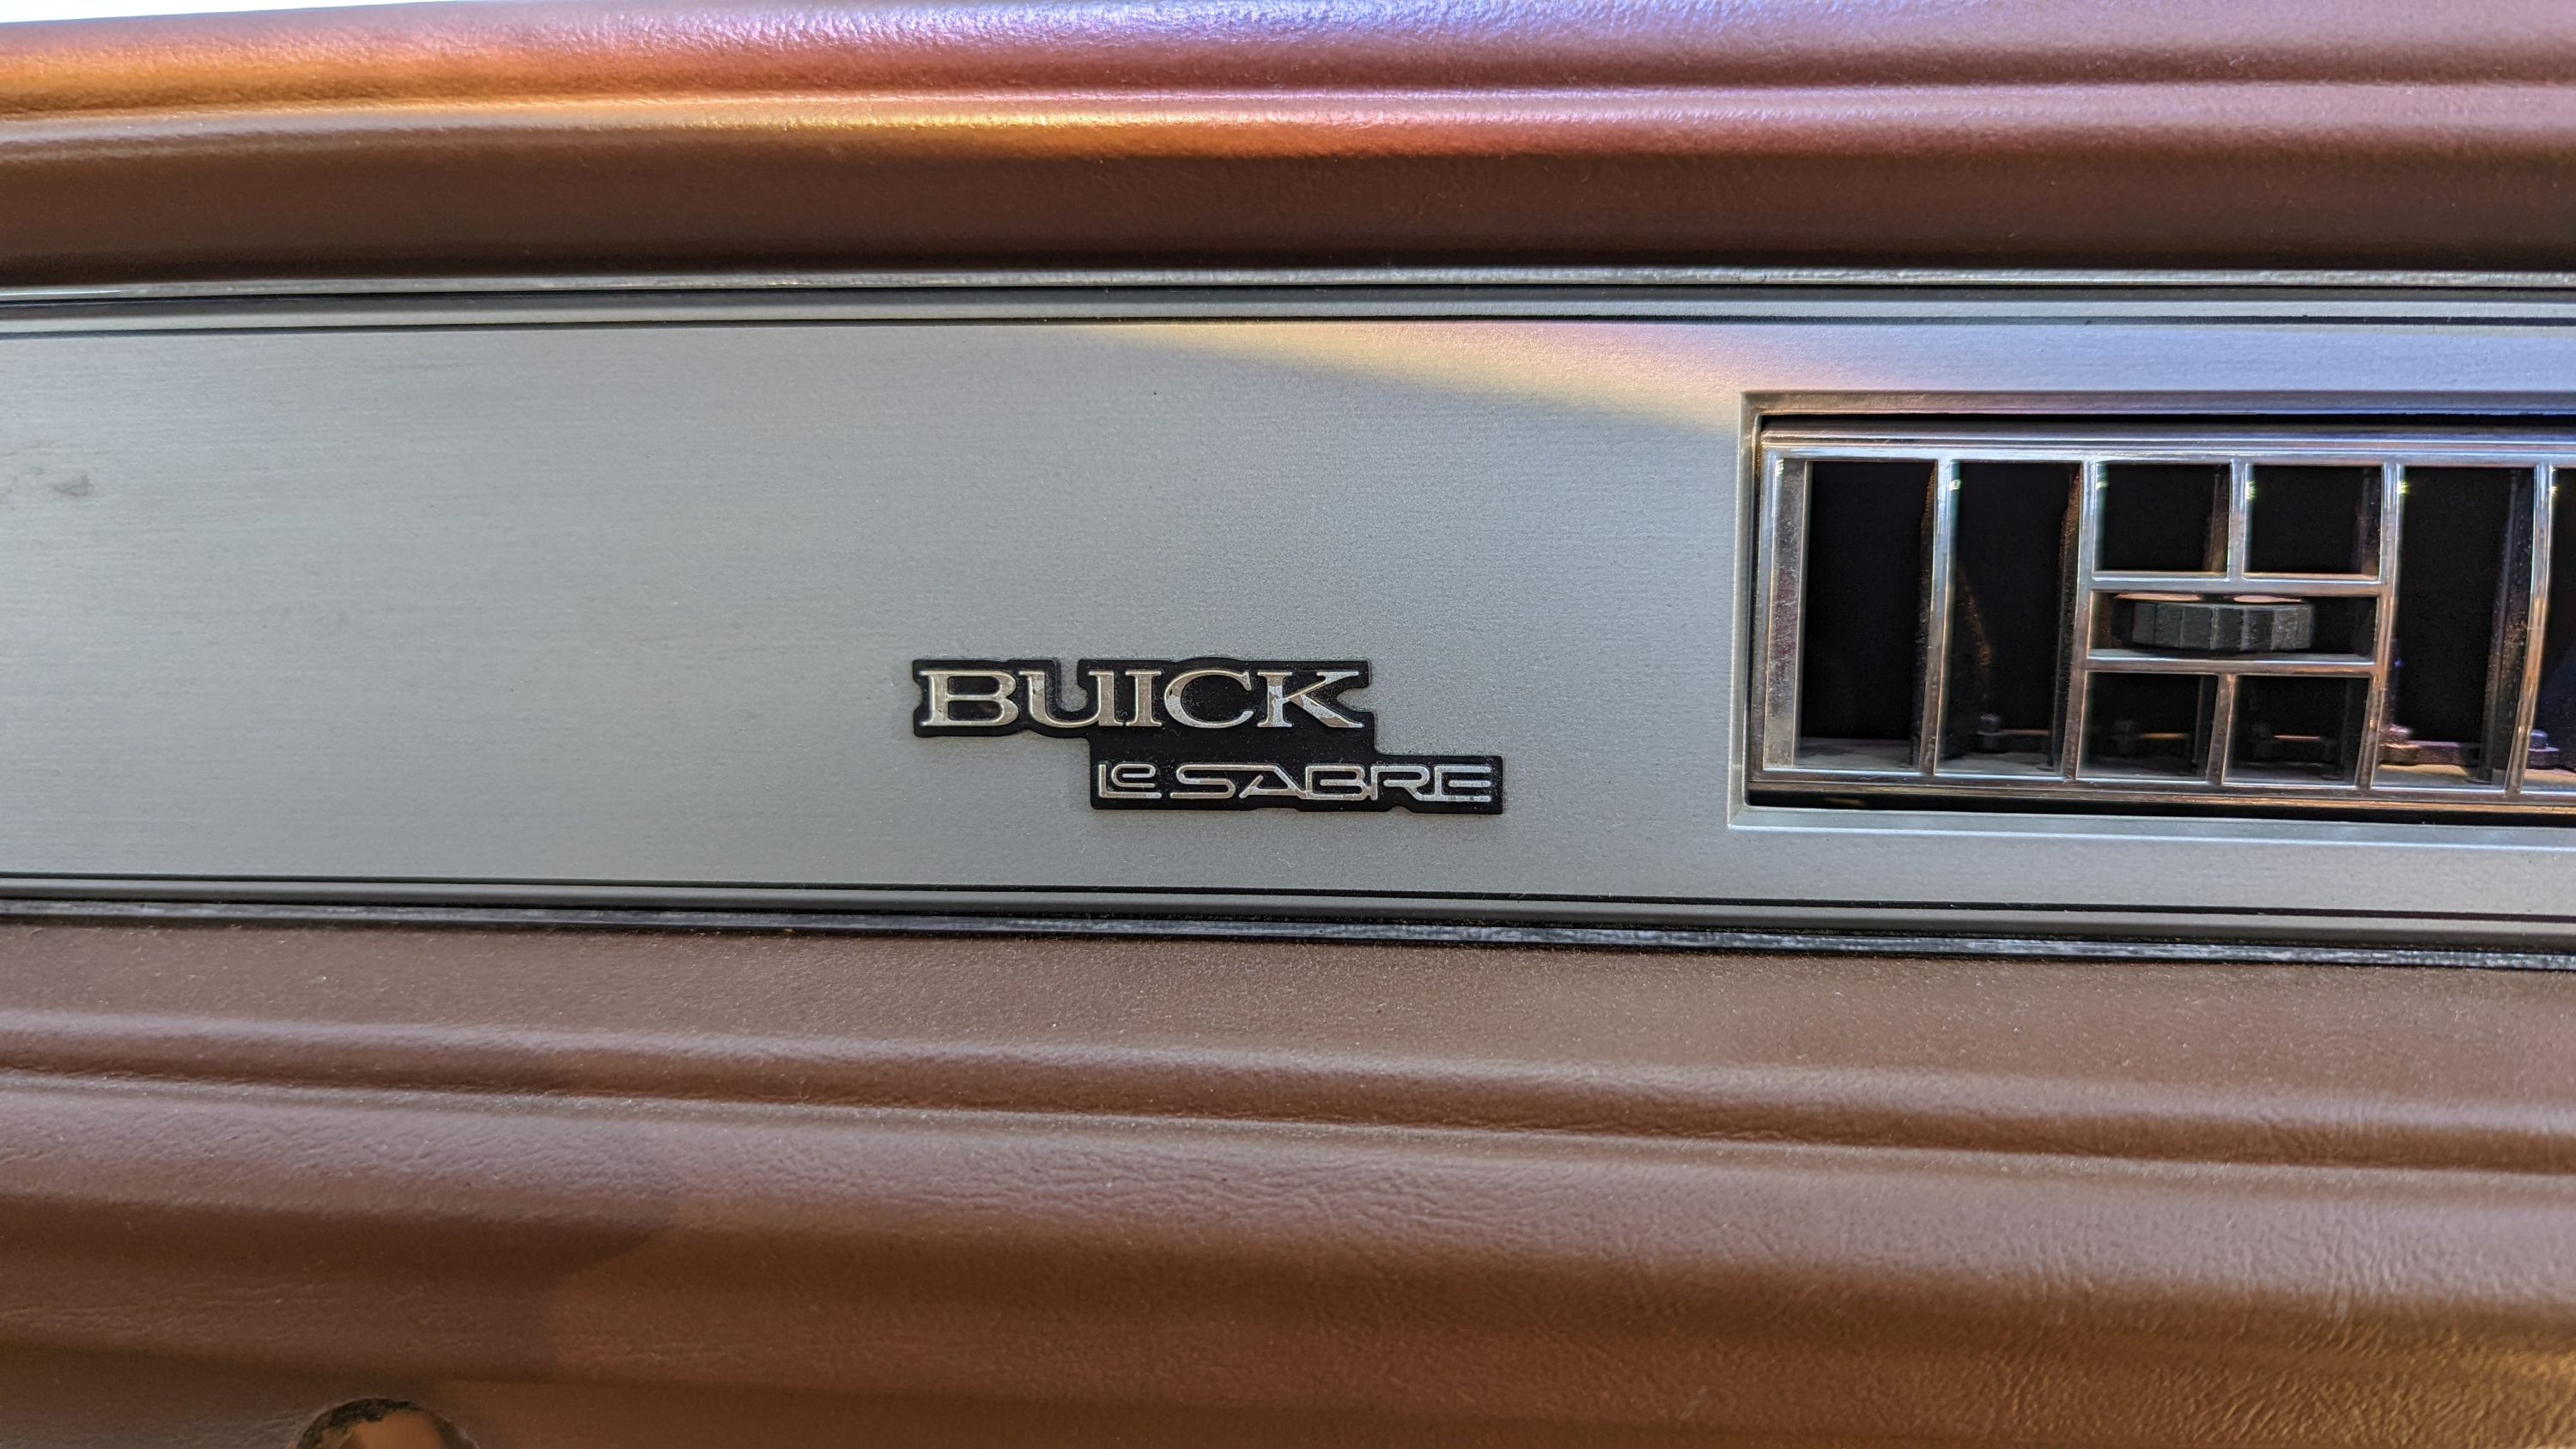 40 - 1988 Buick LeSabre in Colorado junkyard - Photo by Murilee Martin